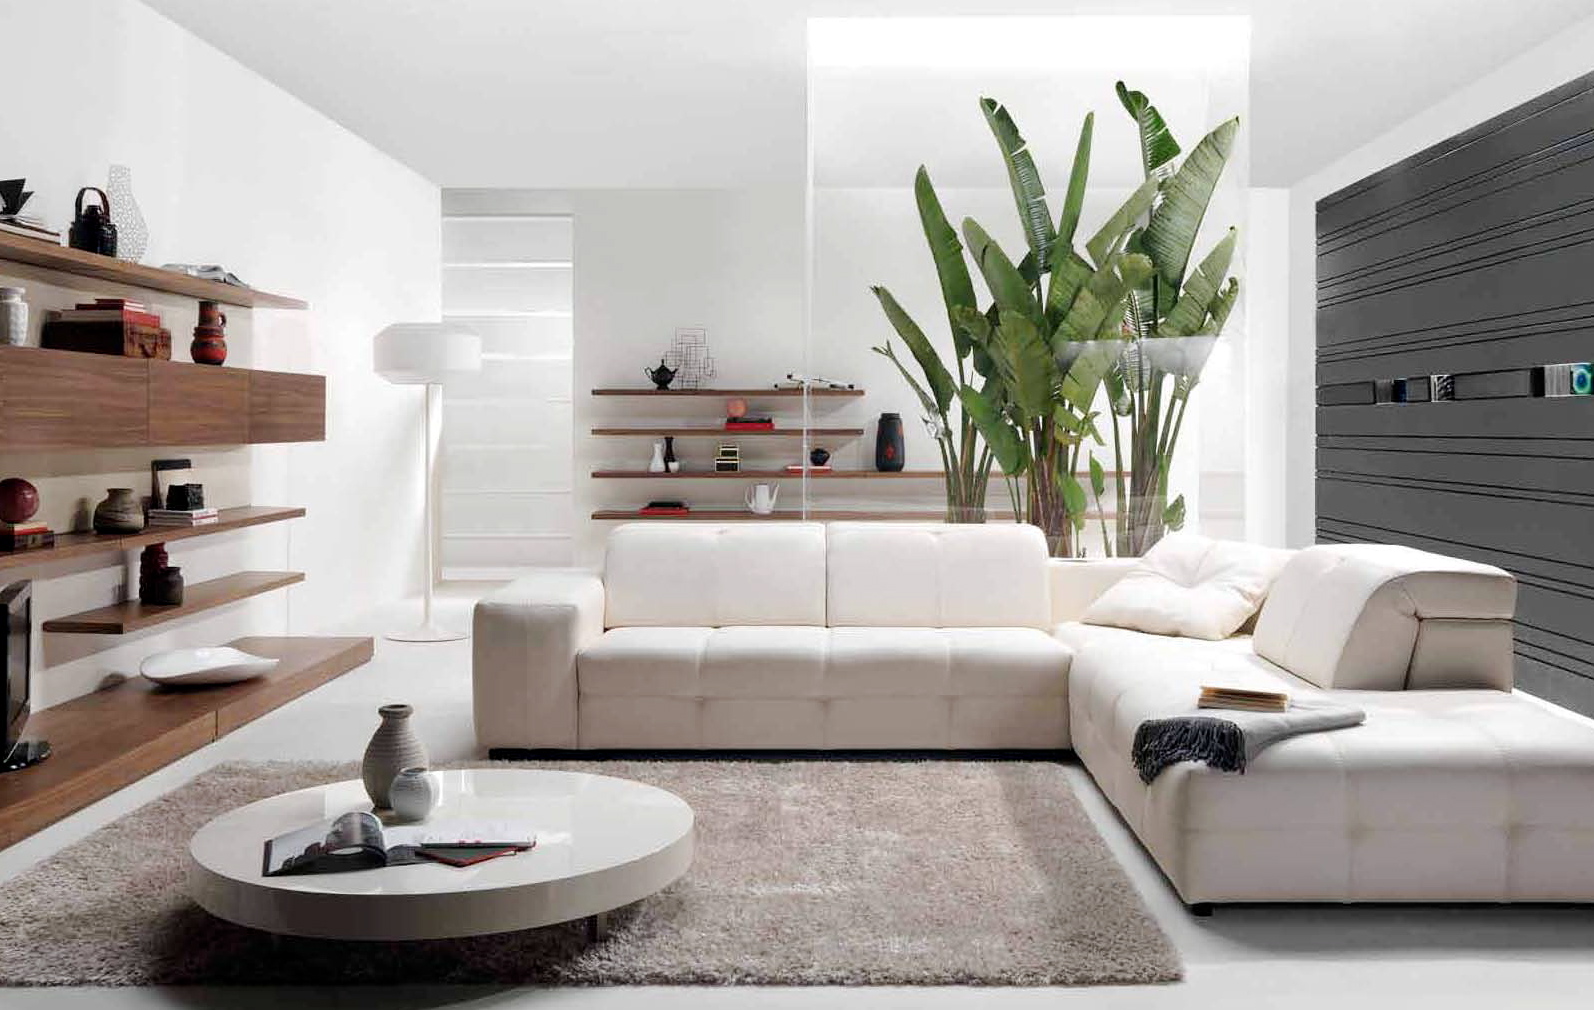 New+Home+Interior+Design+Ideas-entrenoir.blogspot.com-modern-home-interior-design.jpg